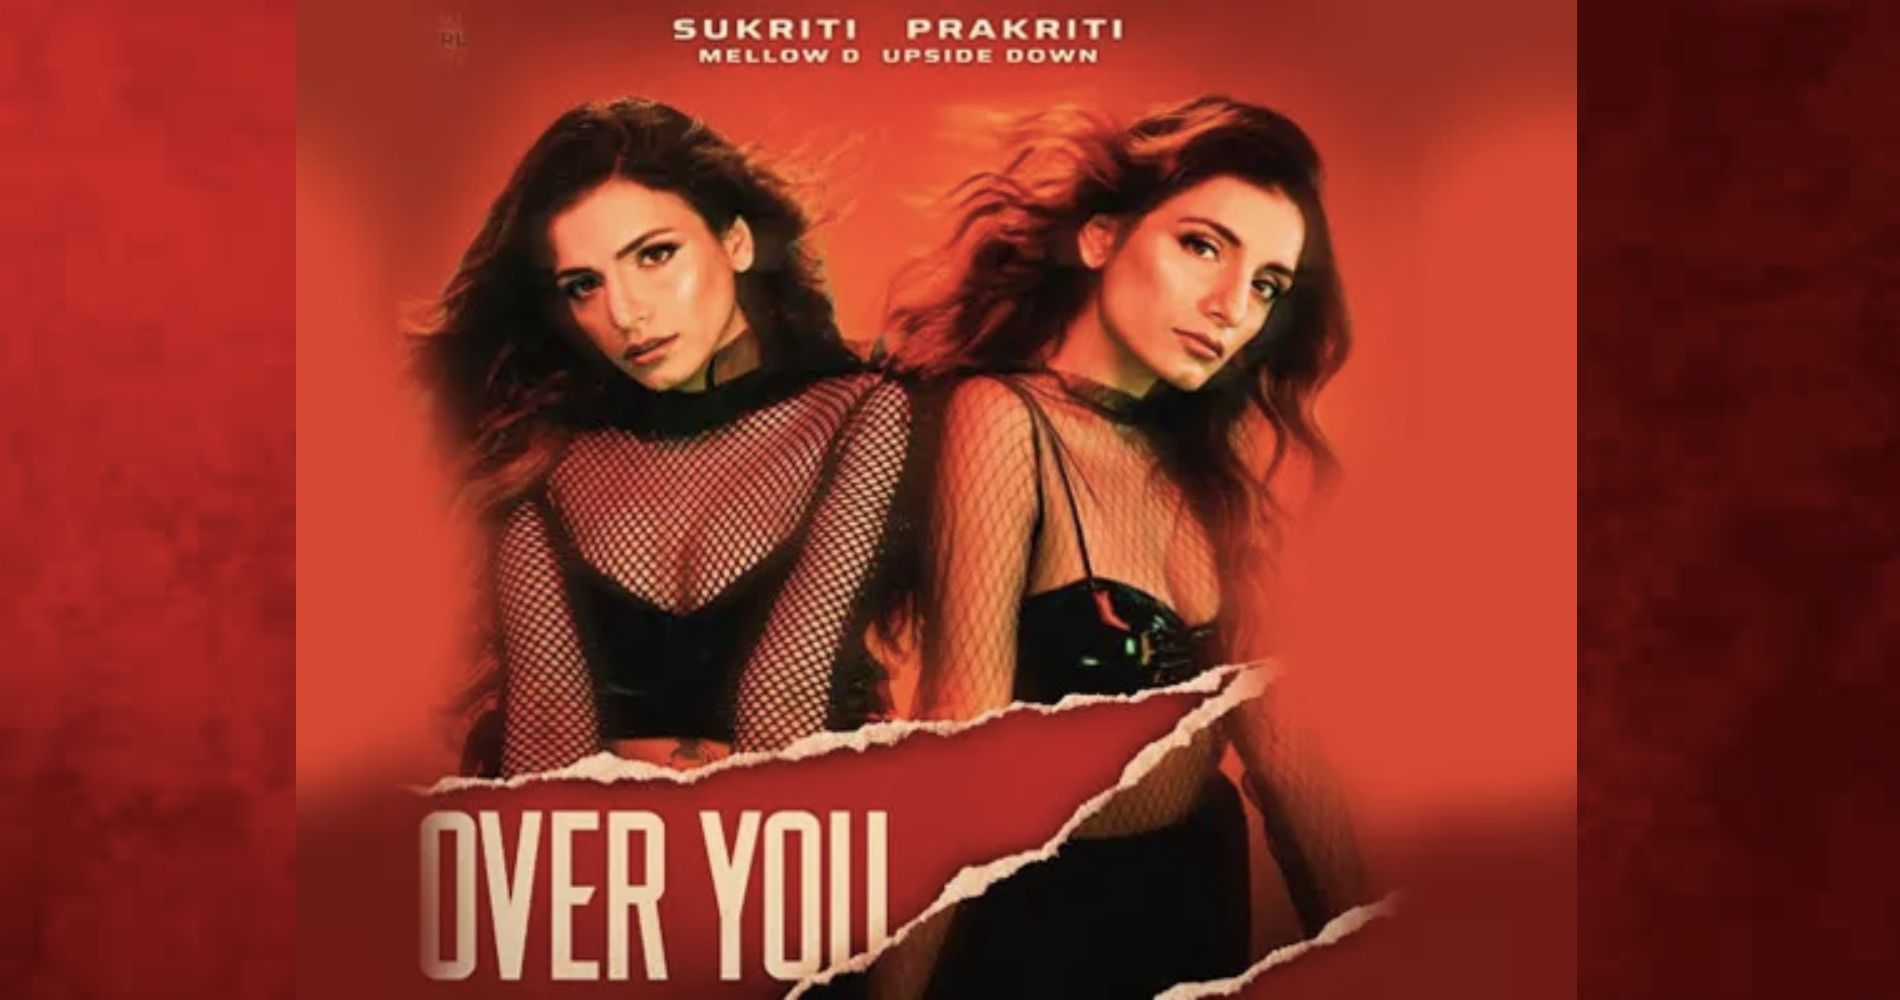 "Sukriti – Prakriti's Mesmerizing Collaboration: "Over You" With Mellow D